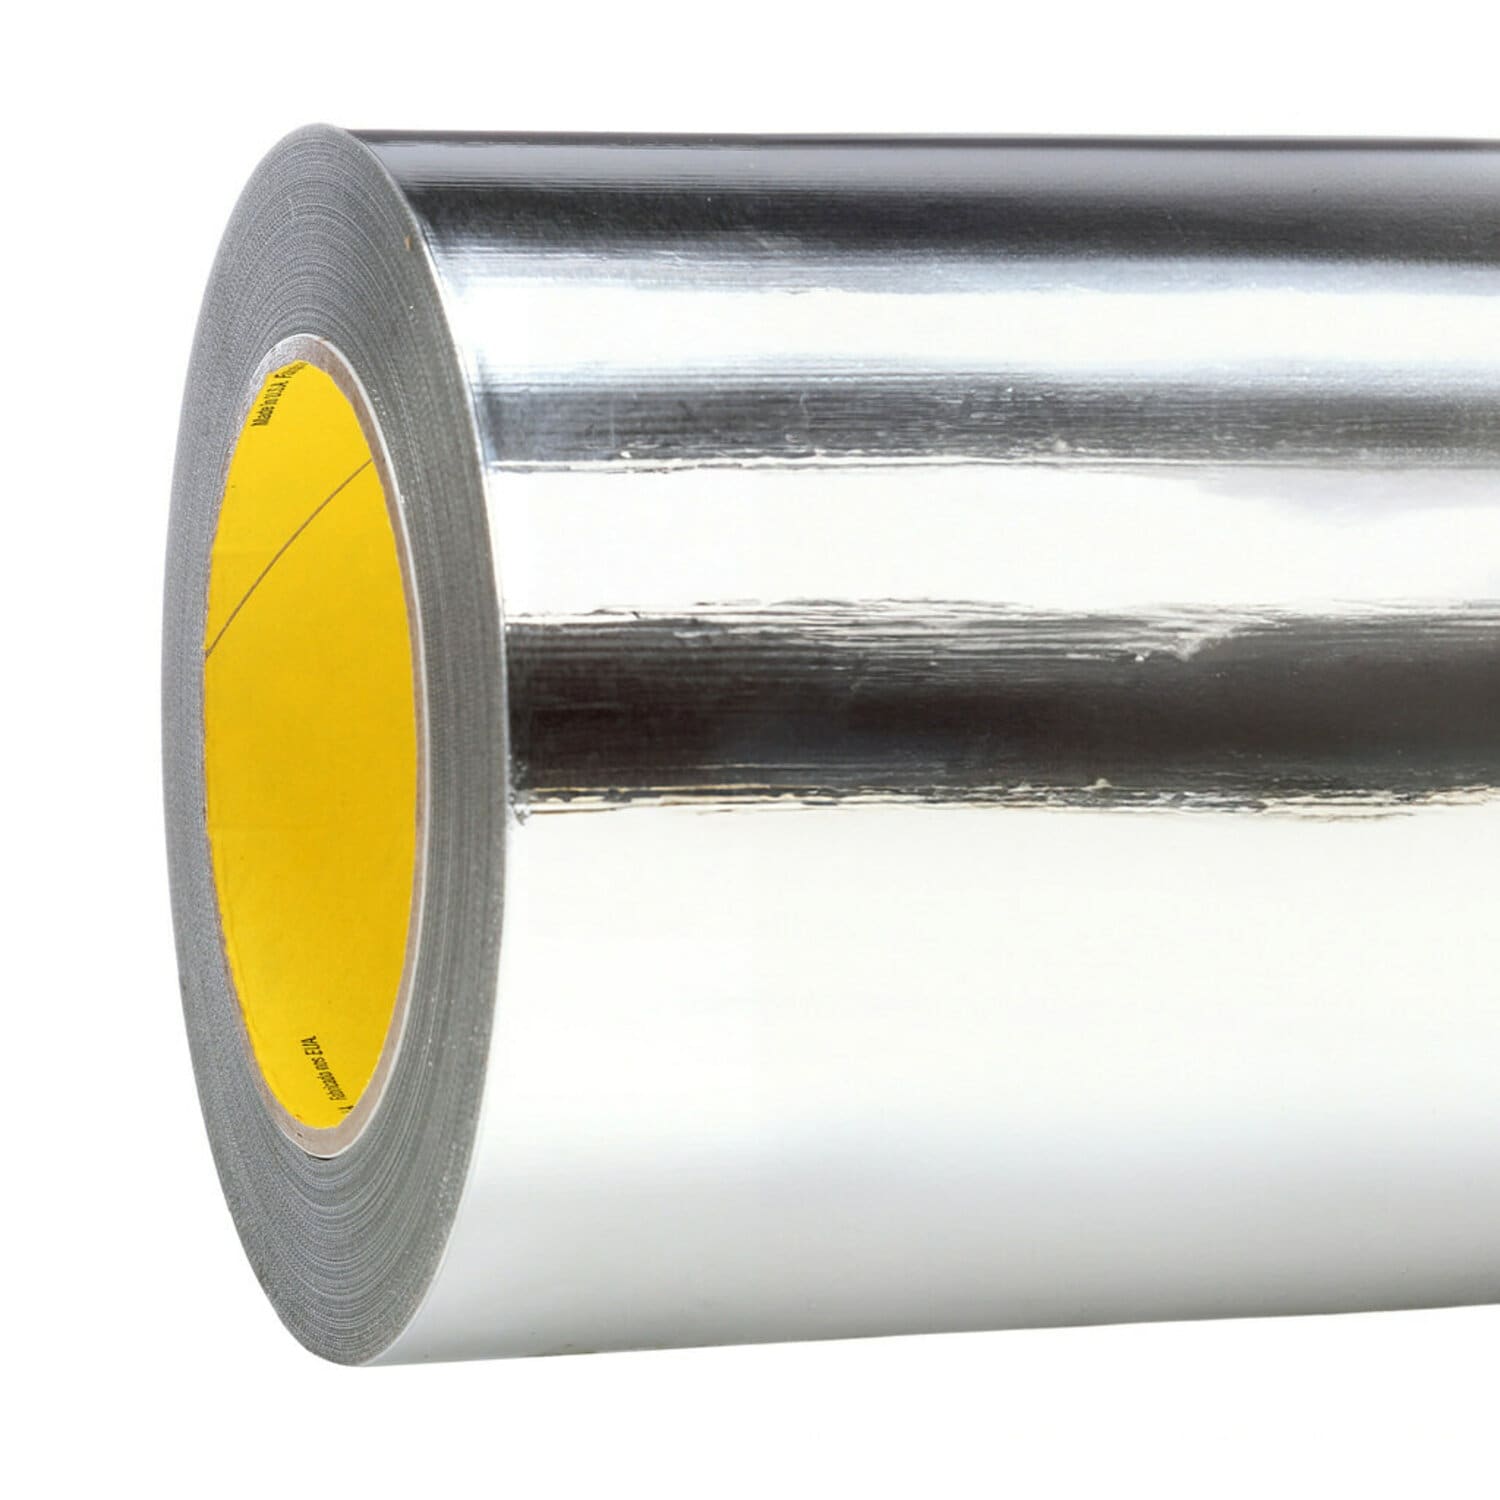 3M High Temperature Aluminum Foil Tape 433 Silver, 23 x 60 yd 3.6 Mil